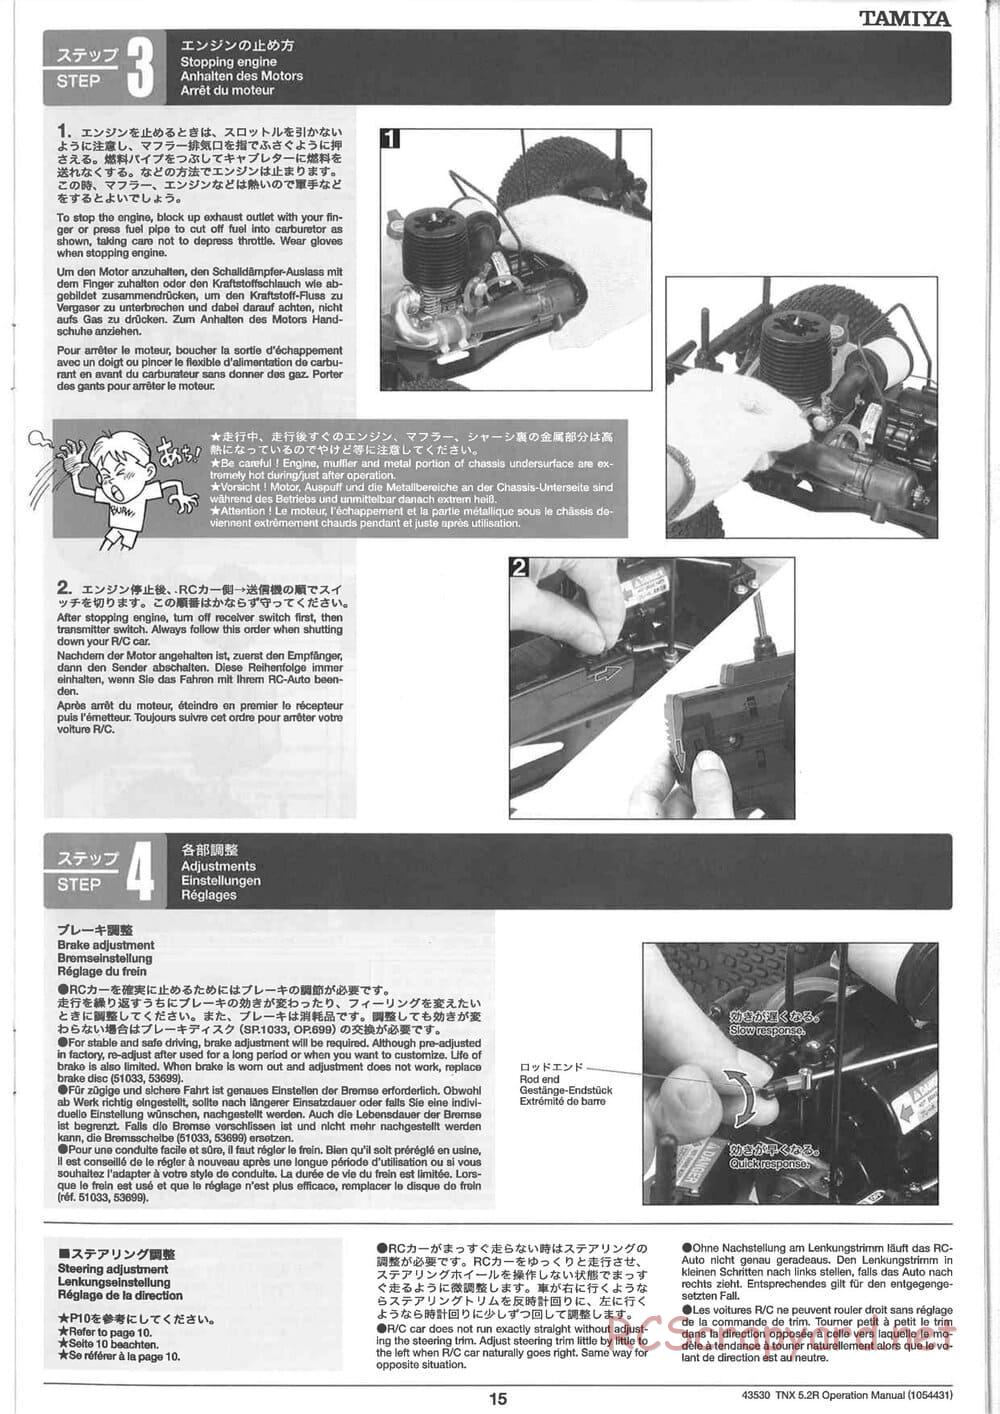 Tamiya - TNX 5.2R - TGM-04 - Operating Manual - Page 15